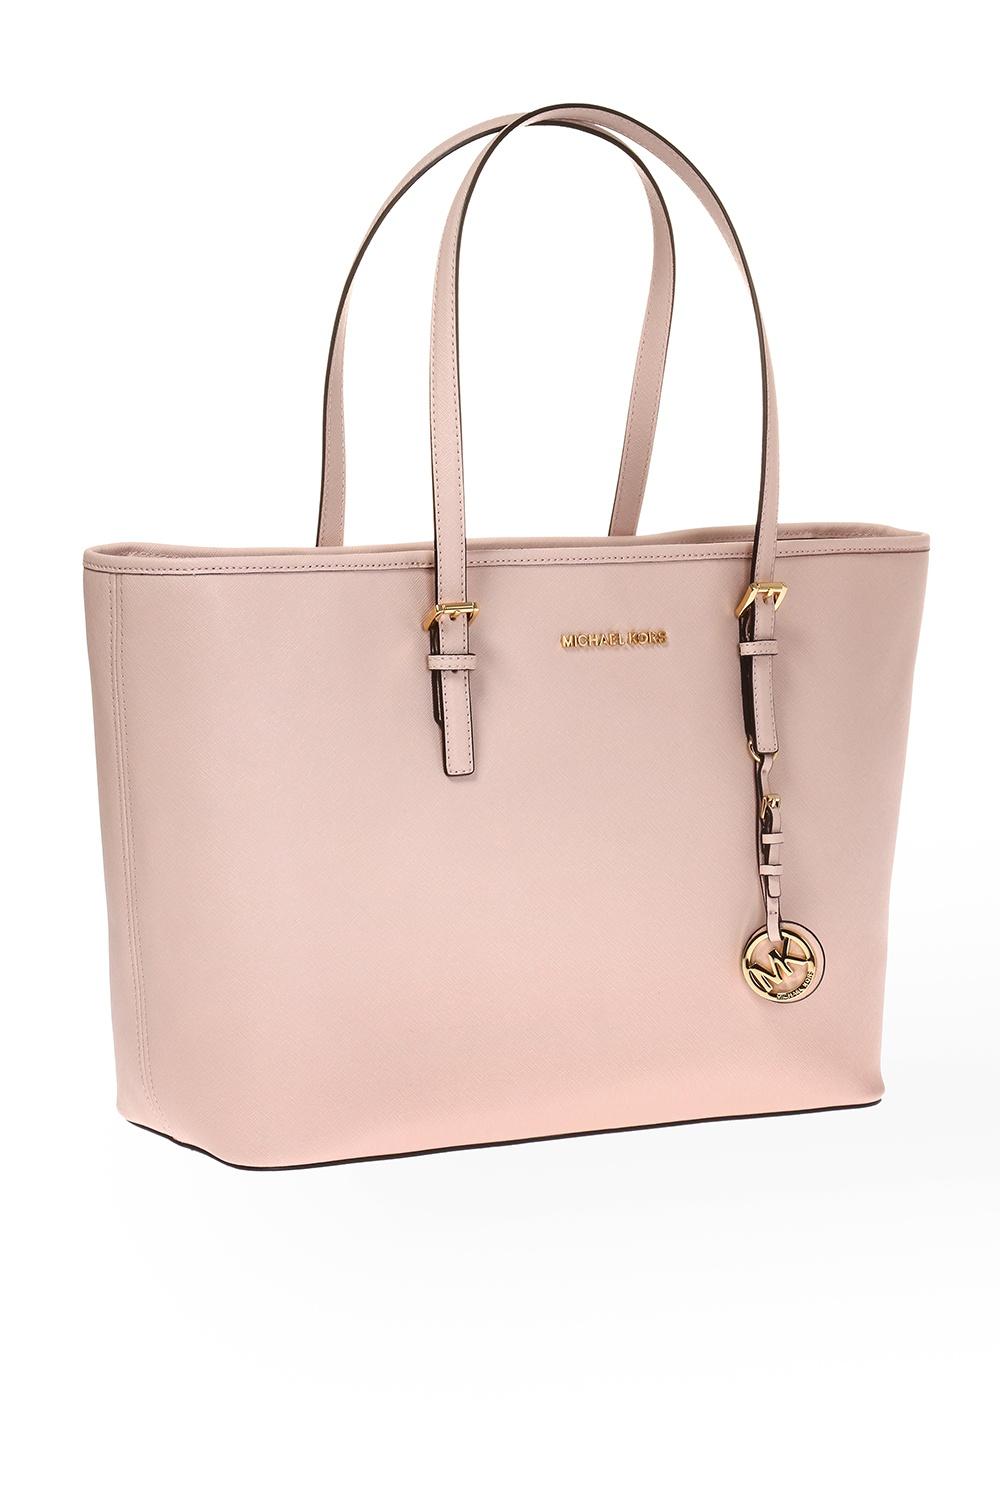 NEW, Rare Michael Kors Mel Medium Saffiano Leather Tote Bag Carry-all Soft  Pink